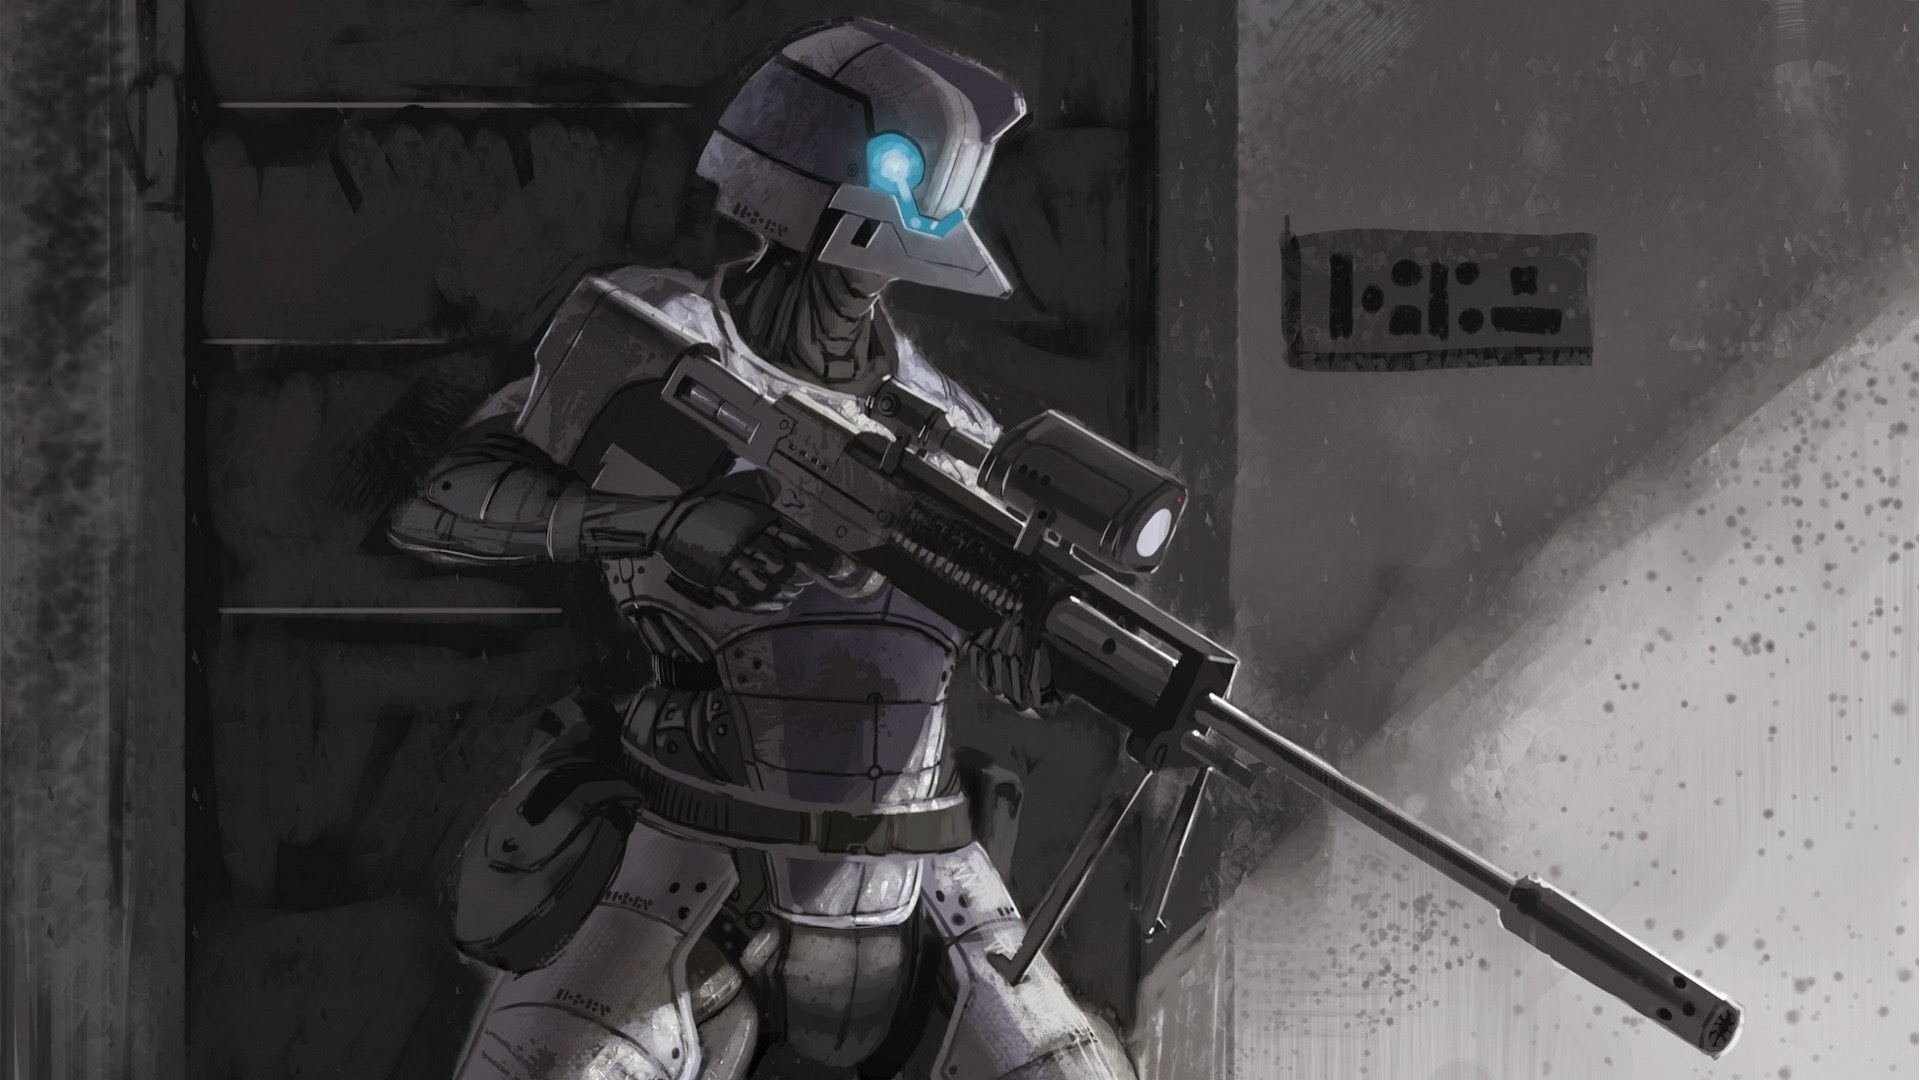 General 1920x1080 sniper rifle science fiction artwork weapon futuristic rifles robot